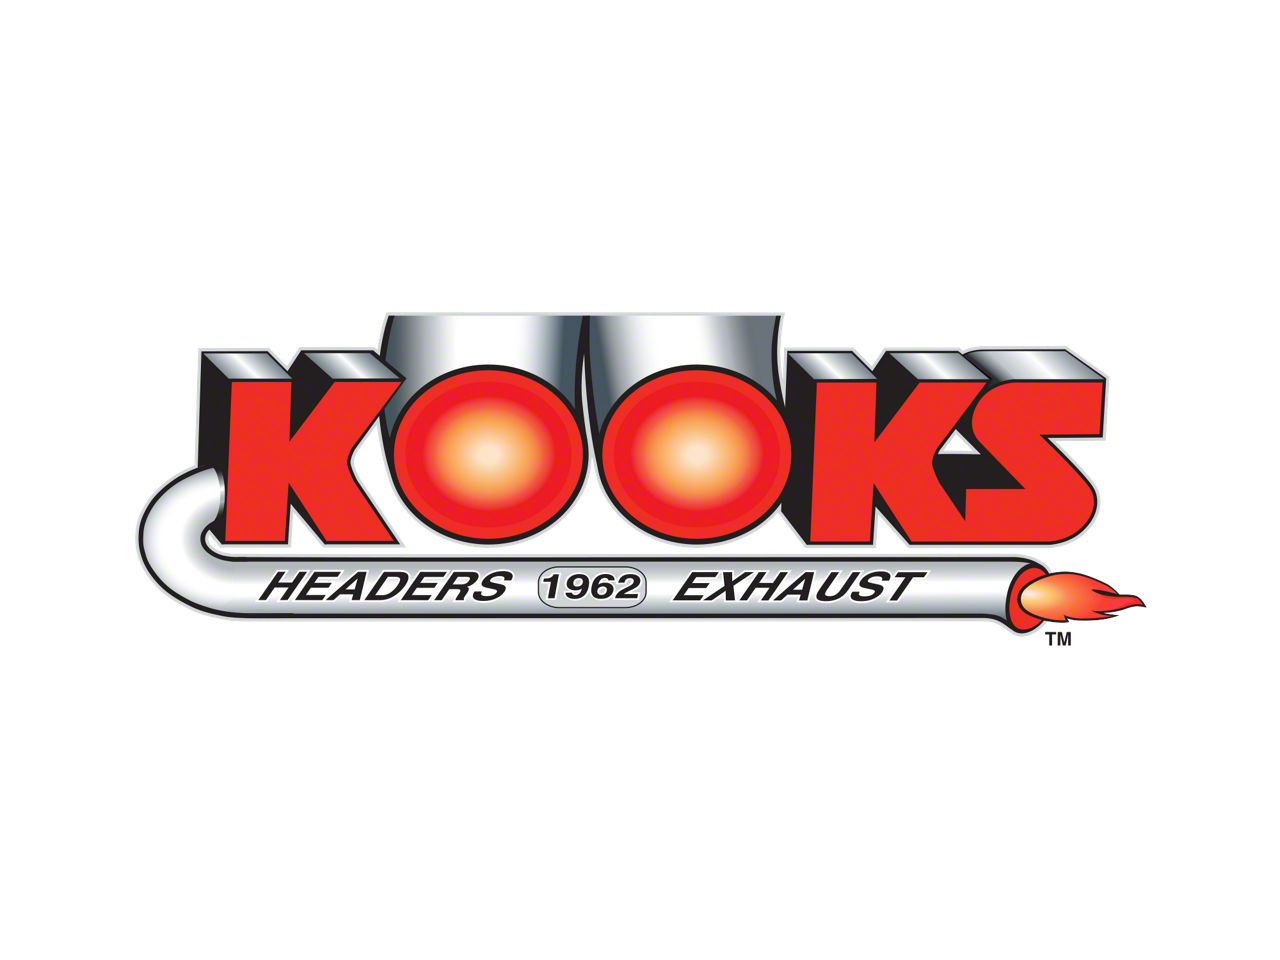 Kooks Headers and Exhaust